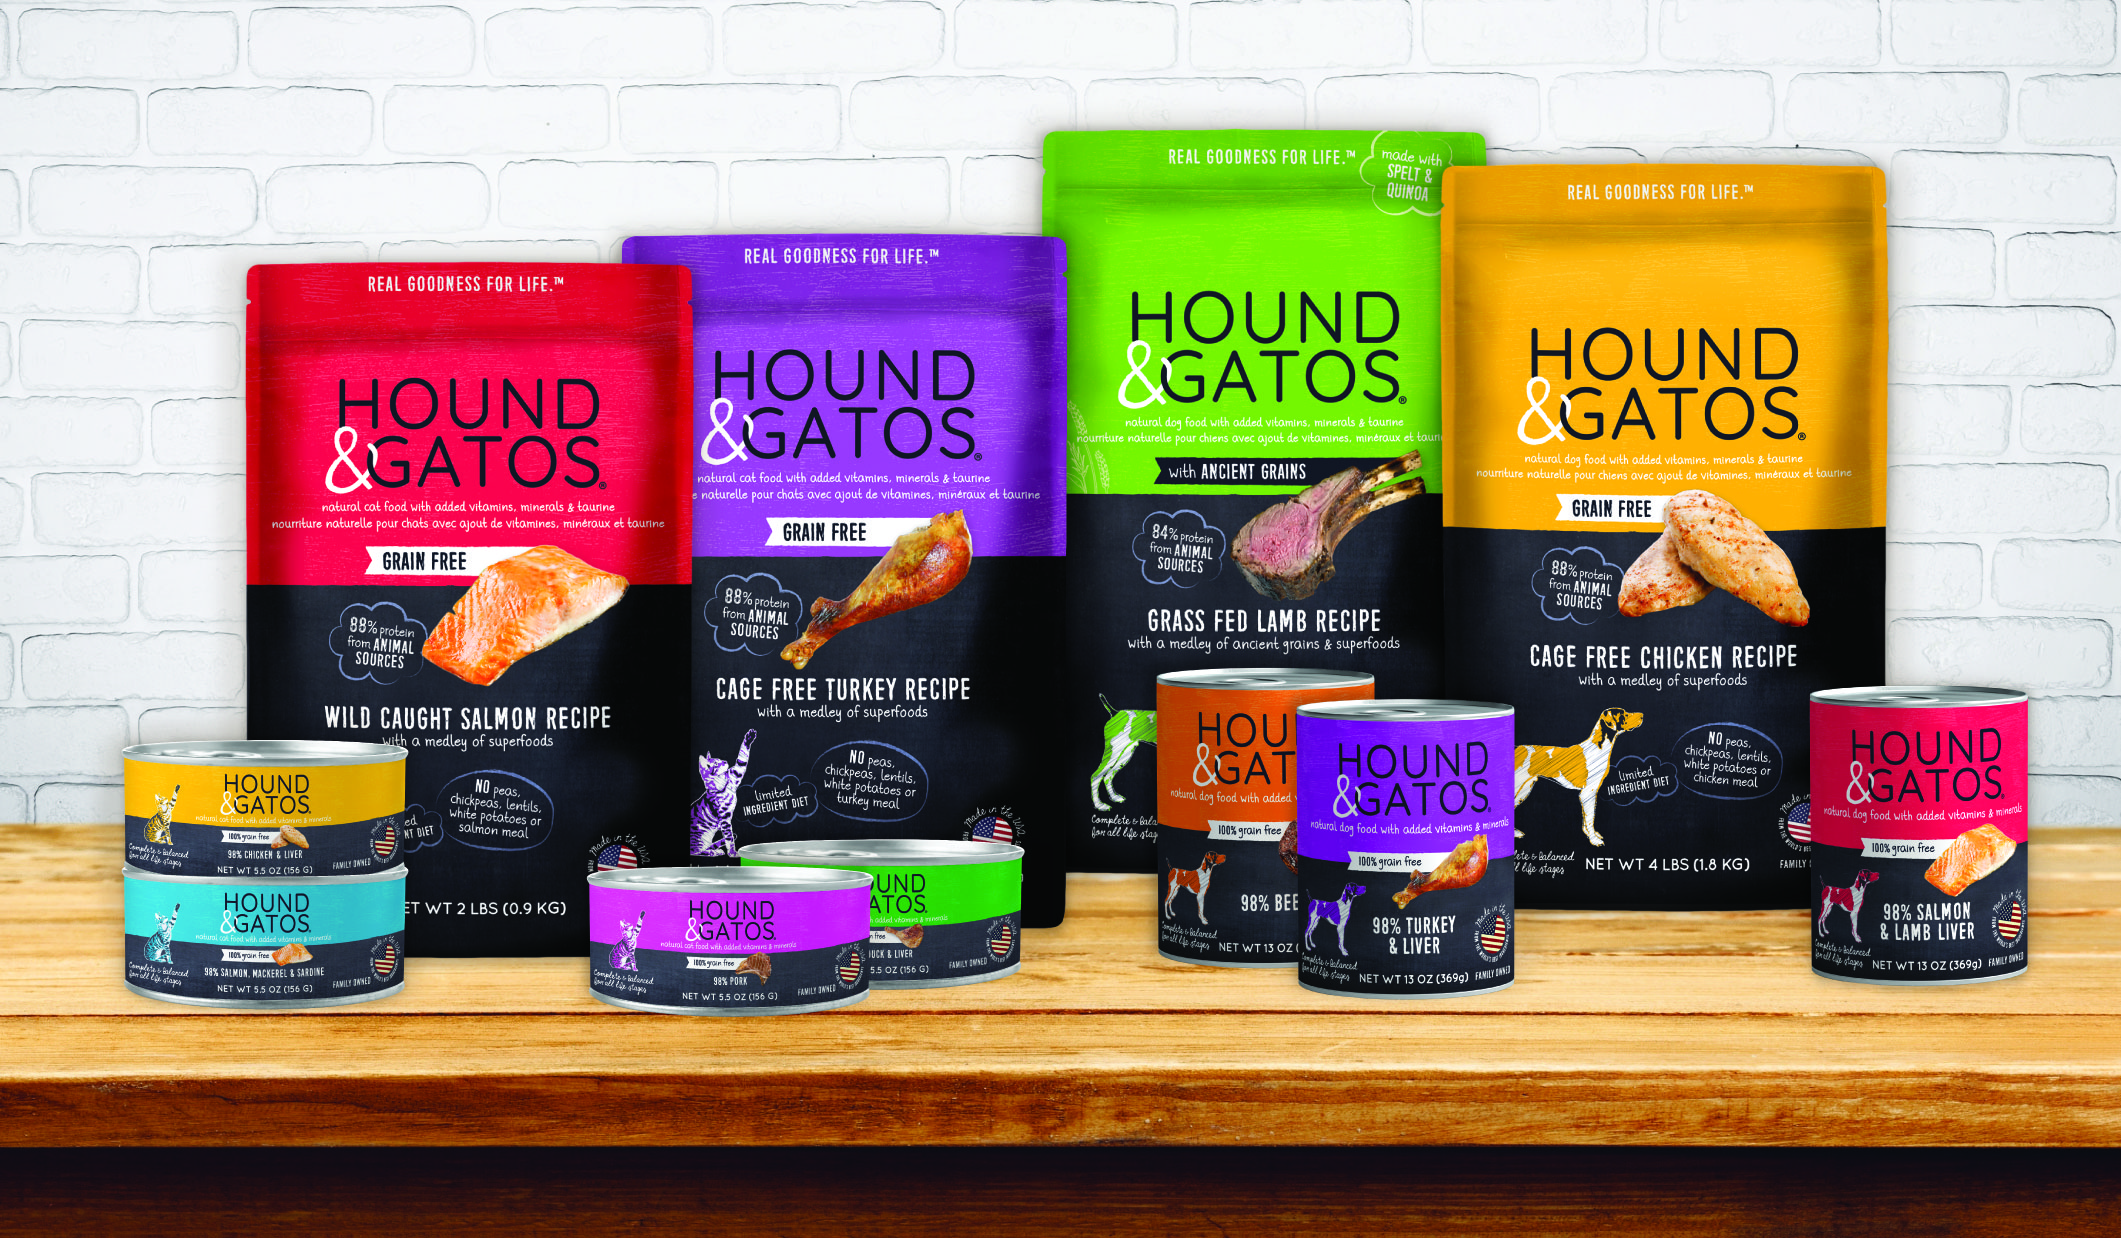 Gott Pet Products' Hound & Gatos pet food product line